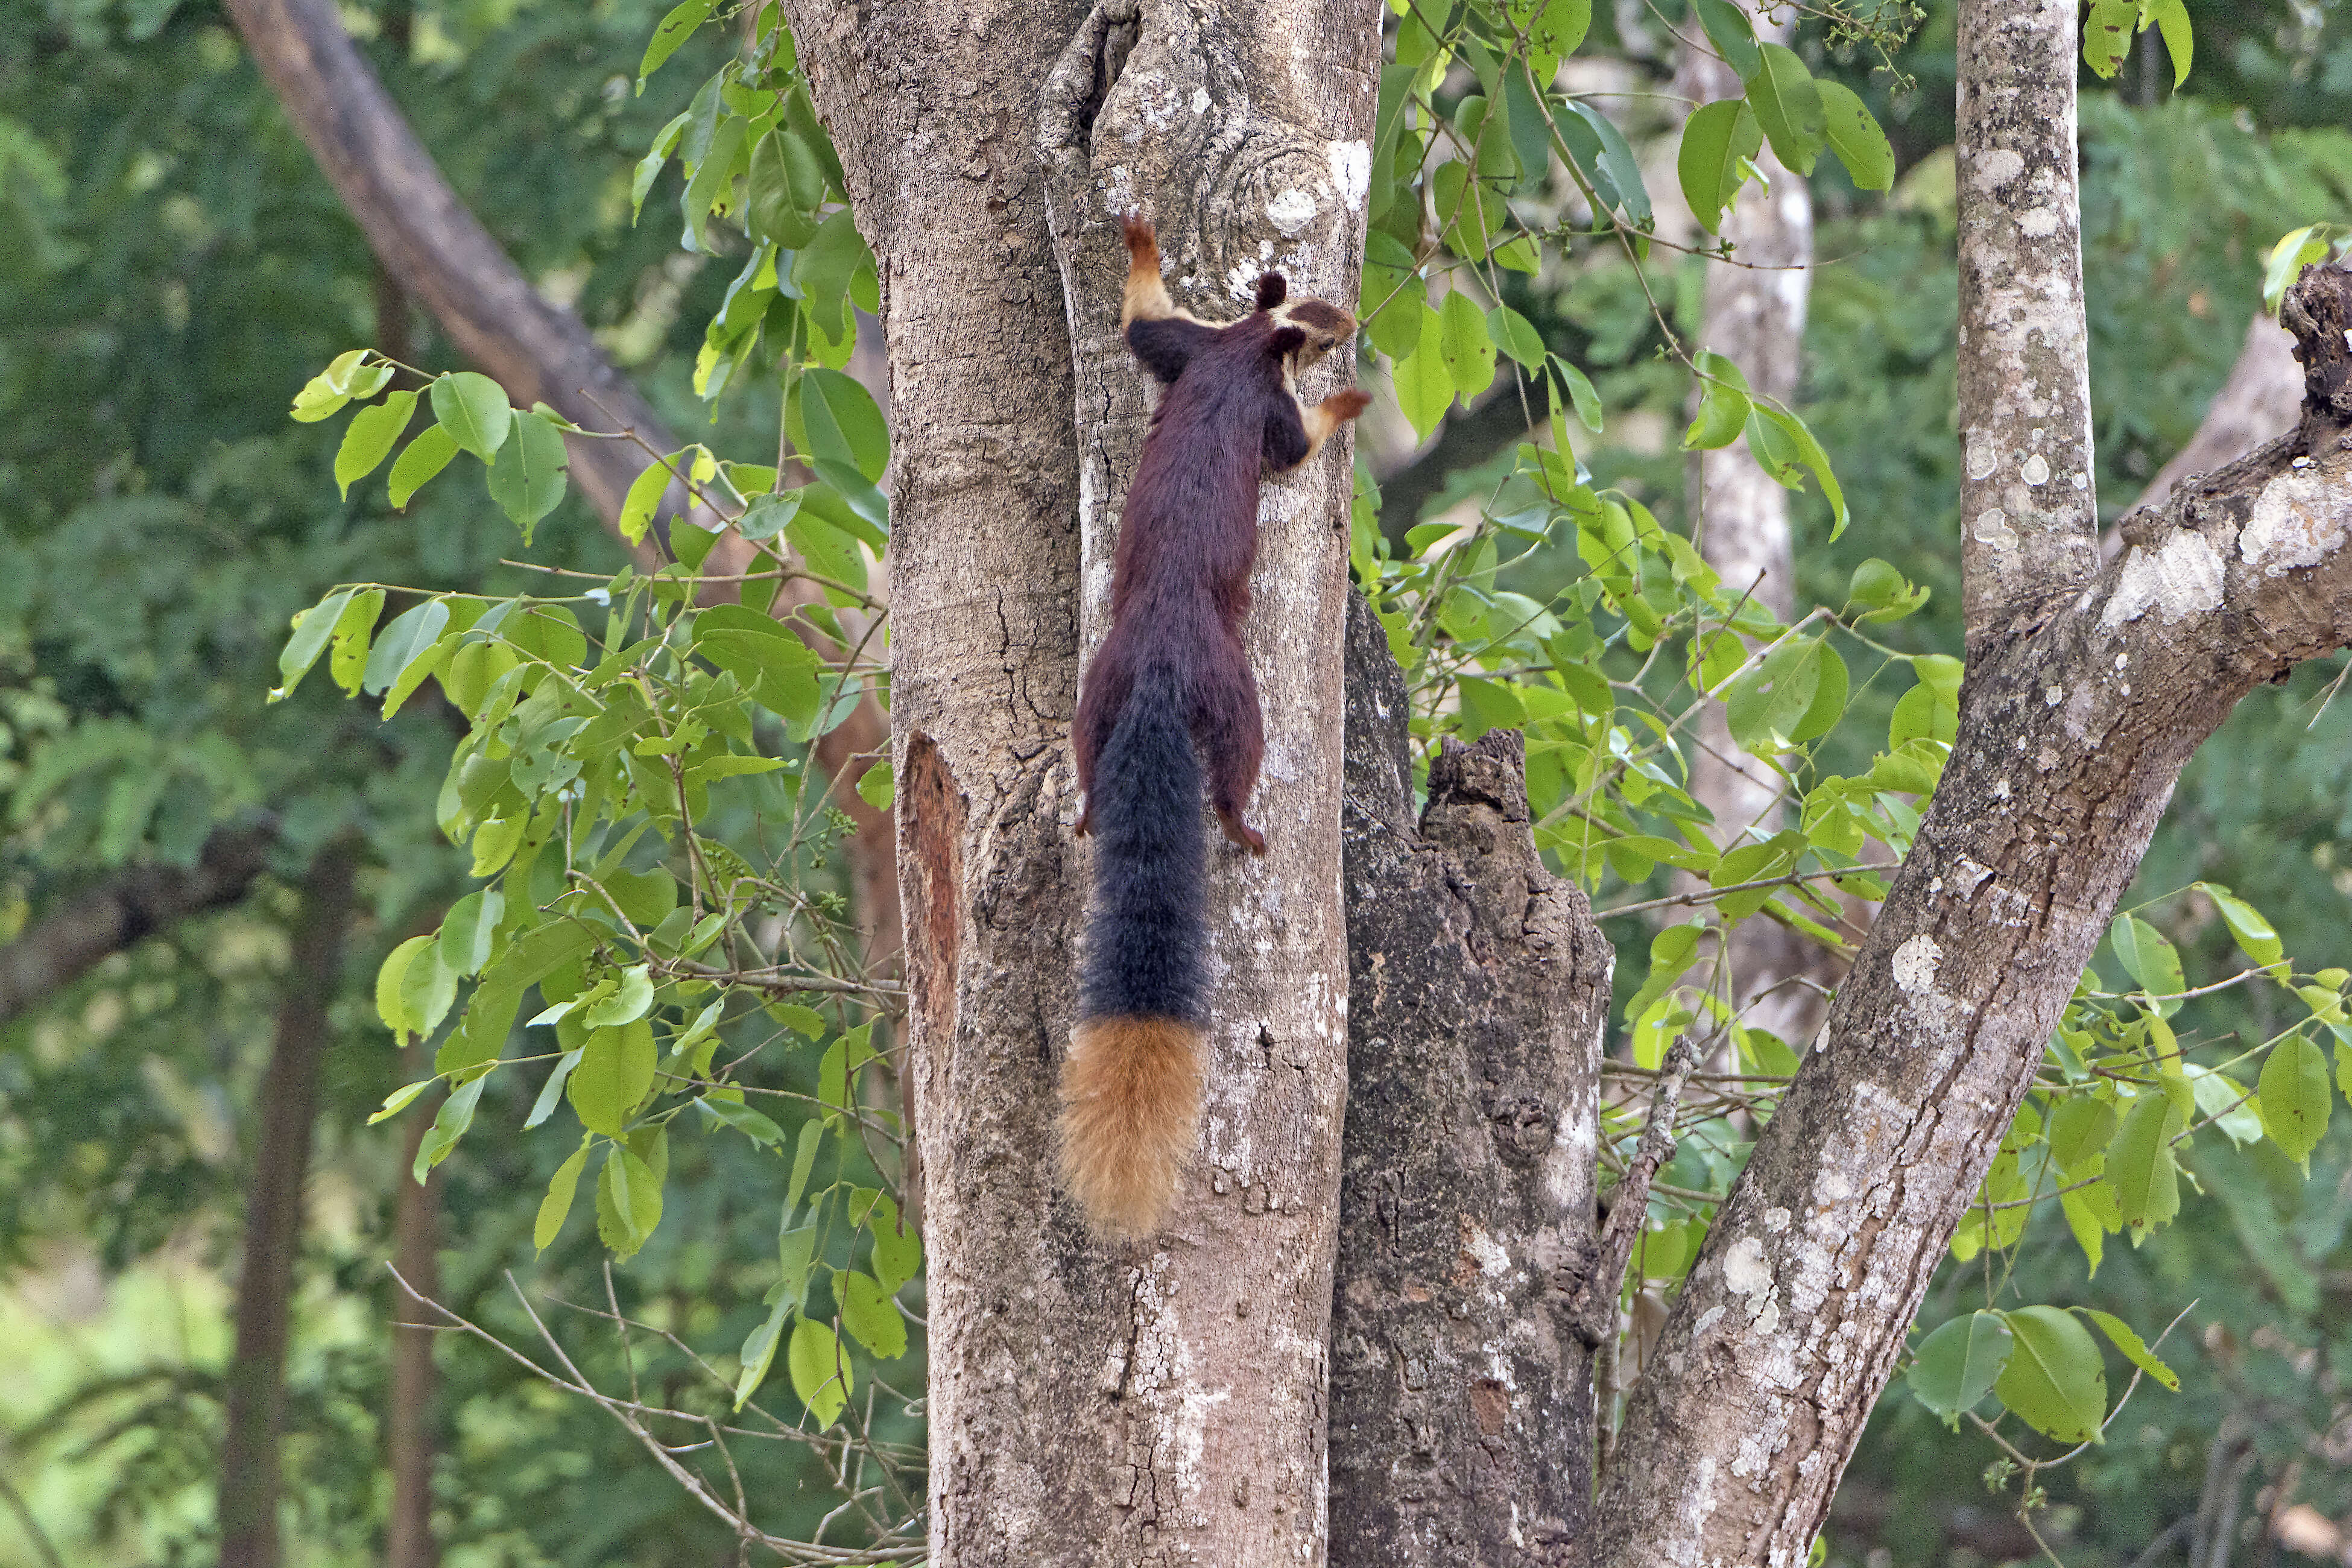 Malabar giant squirrel climbing tree